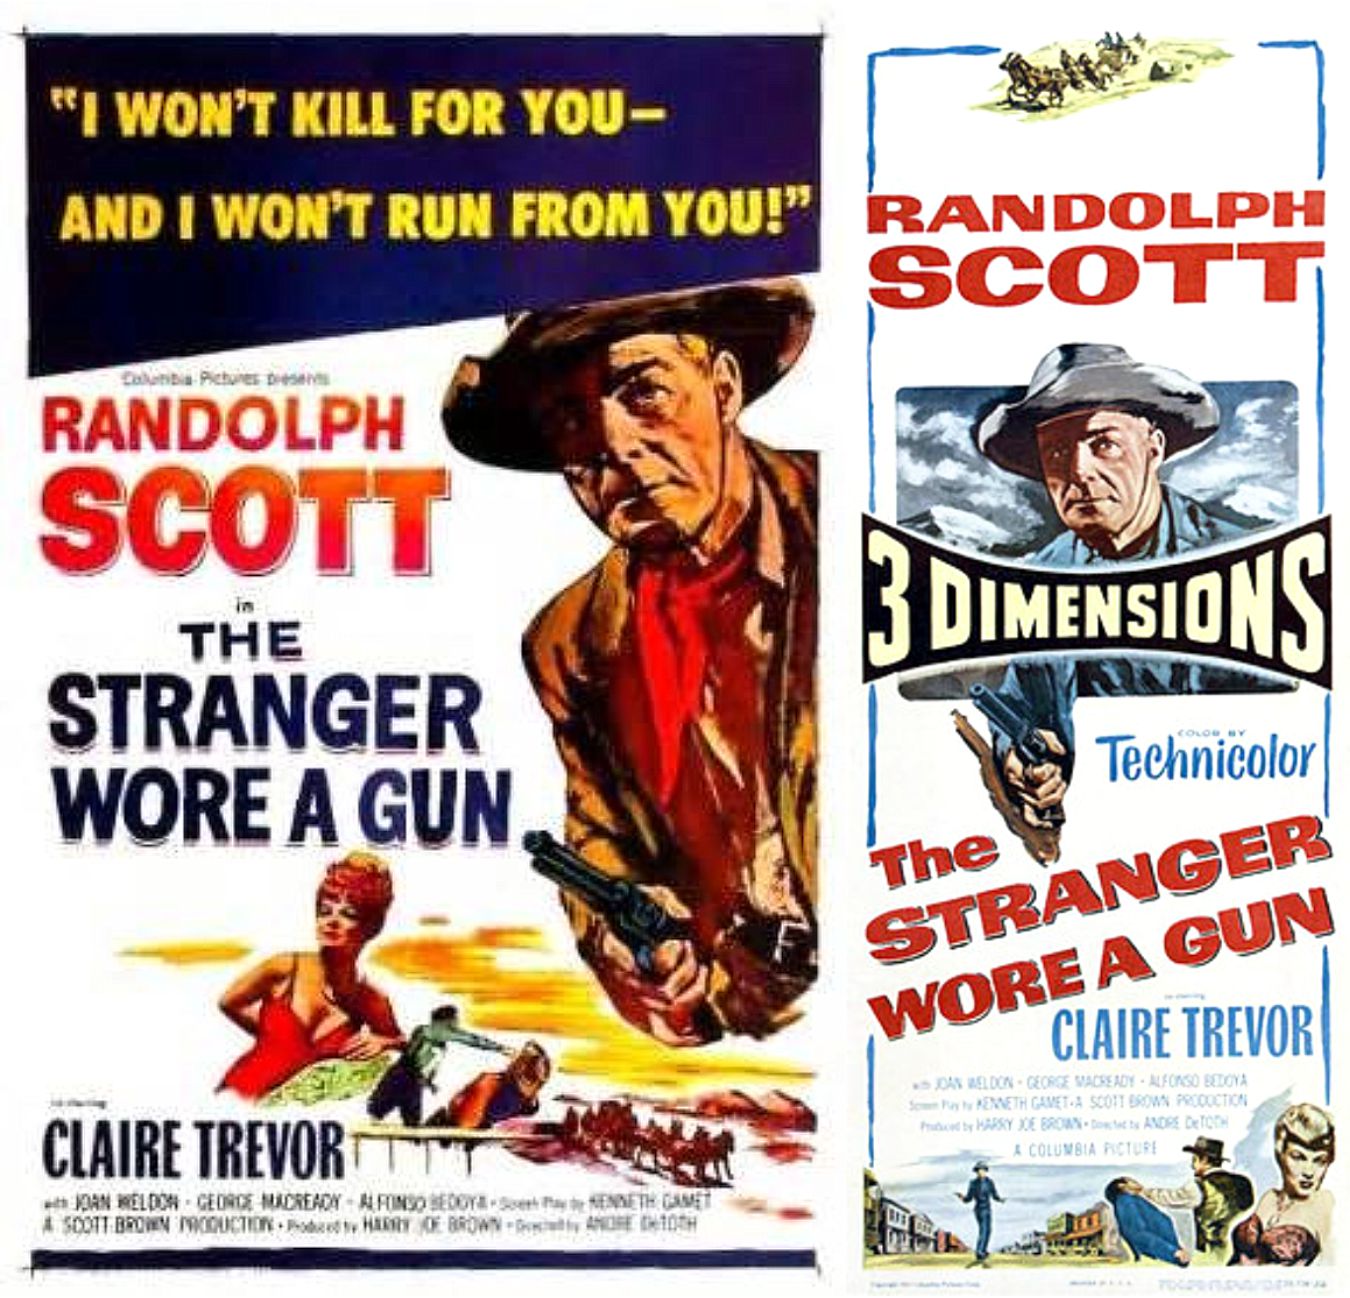 "The Stranger Wore a Gun" starring Randolph Scott (Columbia Pictures)